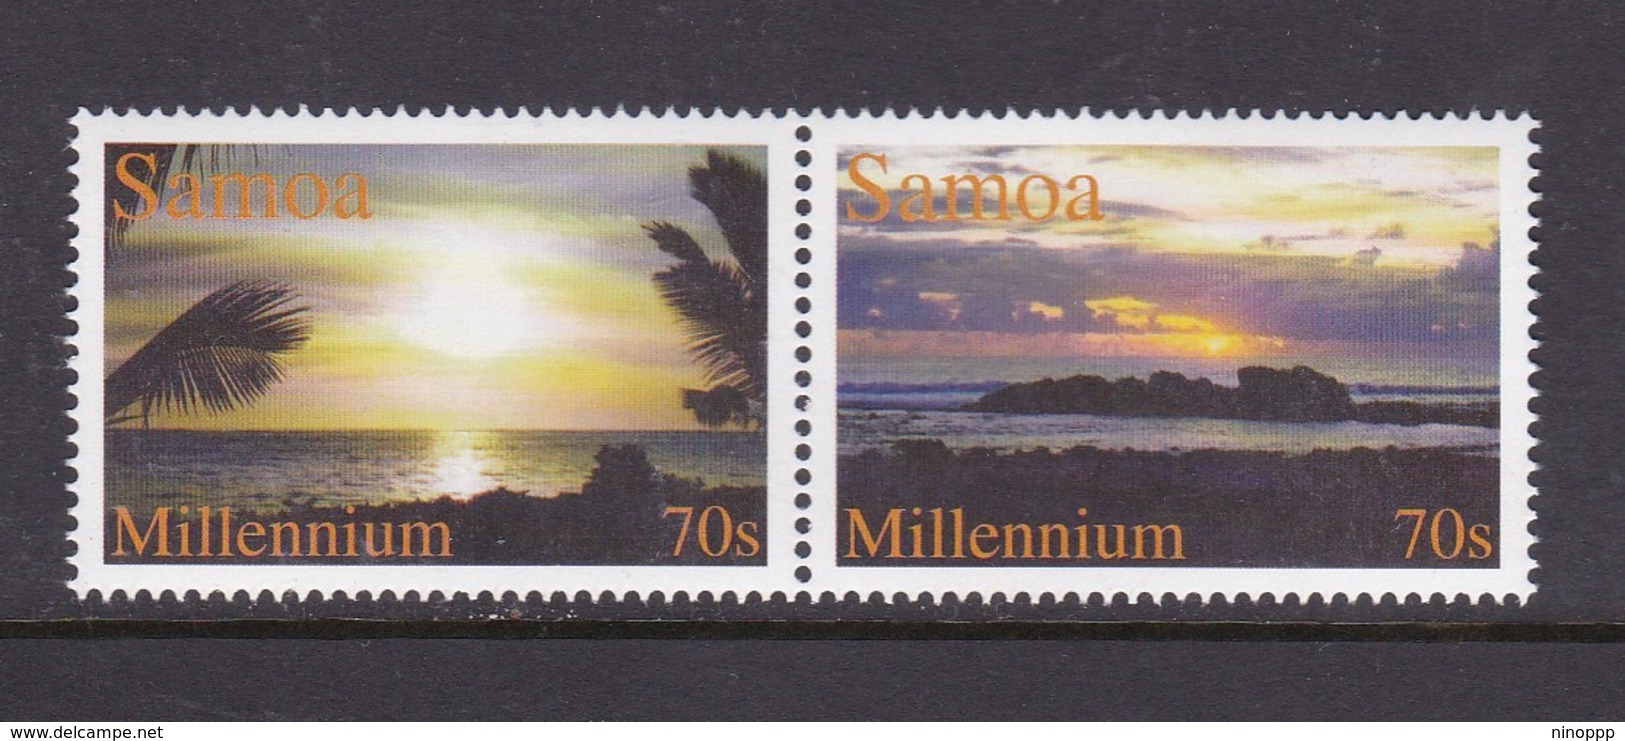 Samoa SG 1058-1059 2000 Millennium.mint Never Hinged - Samoa